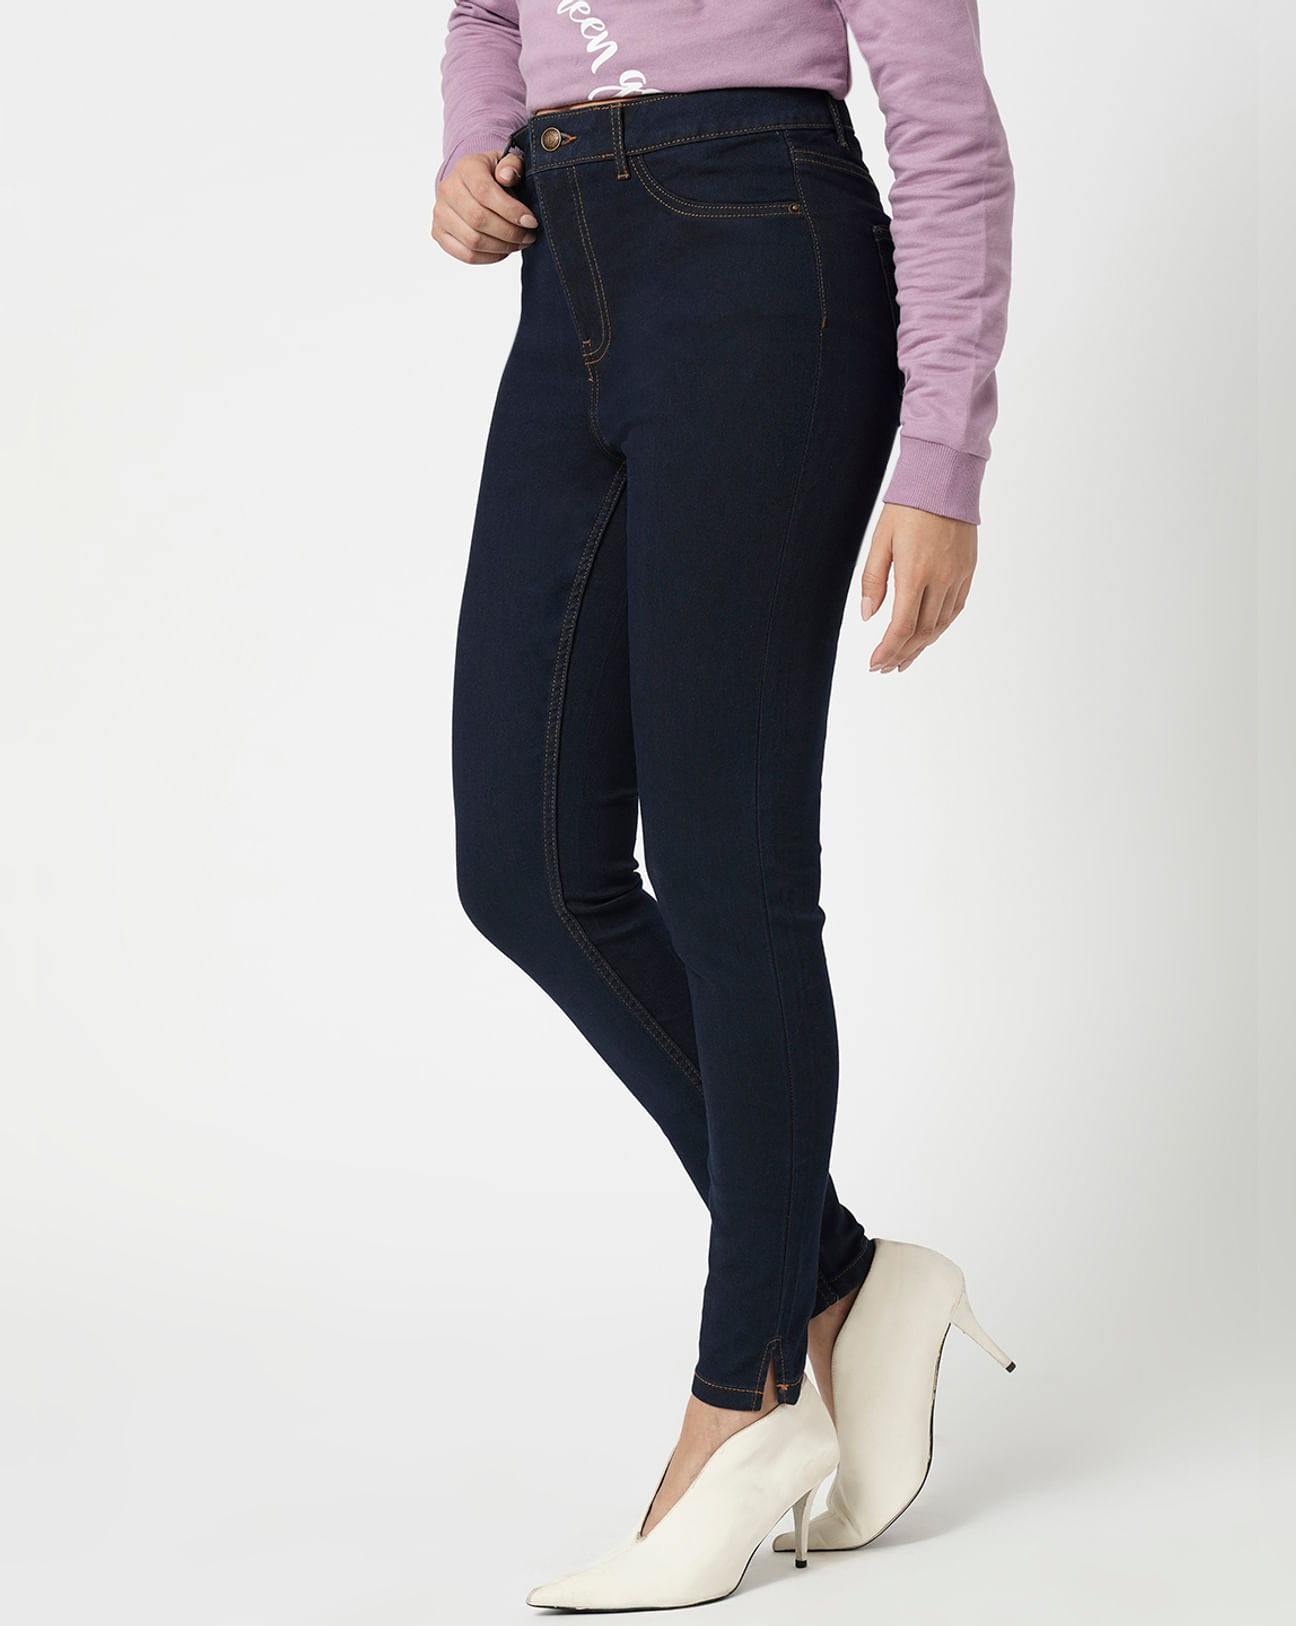 Buy Navy Blue Jeans & Jeggings for Women by ISCENERY BY VERO MODA